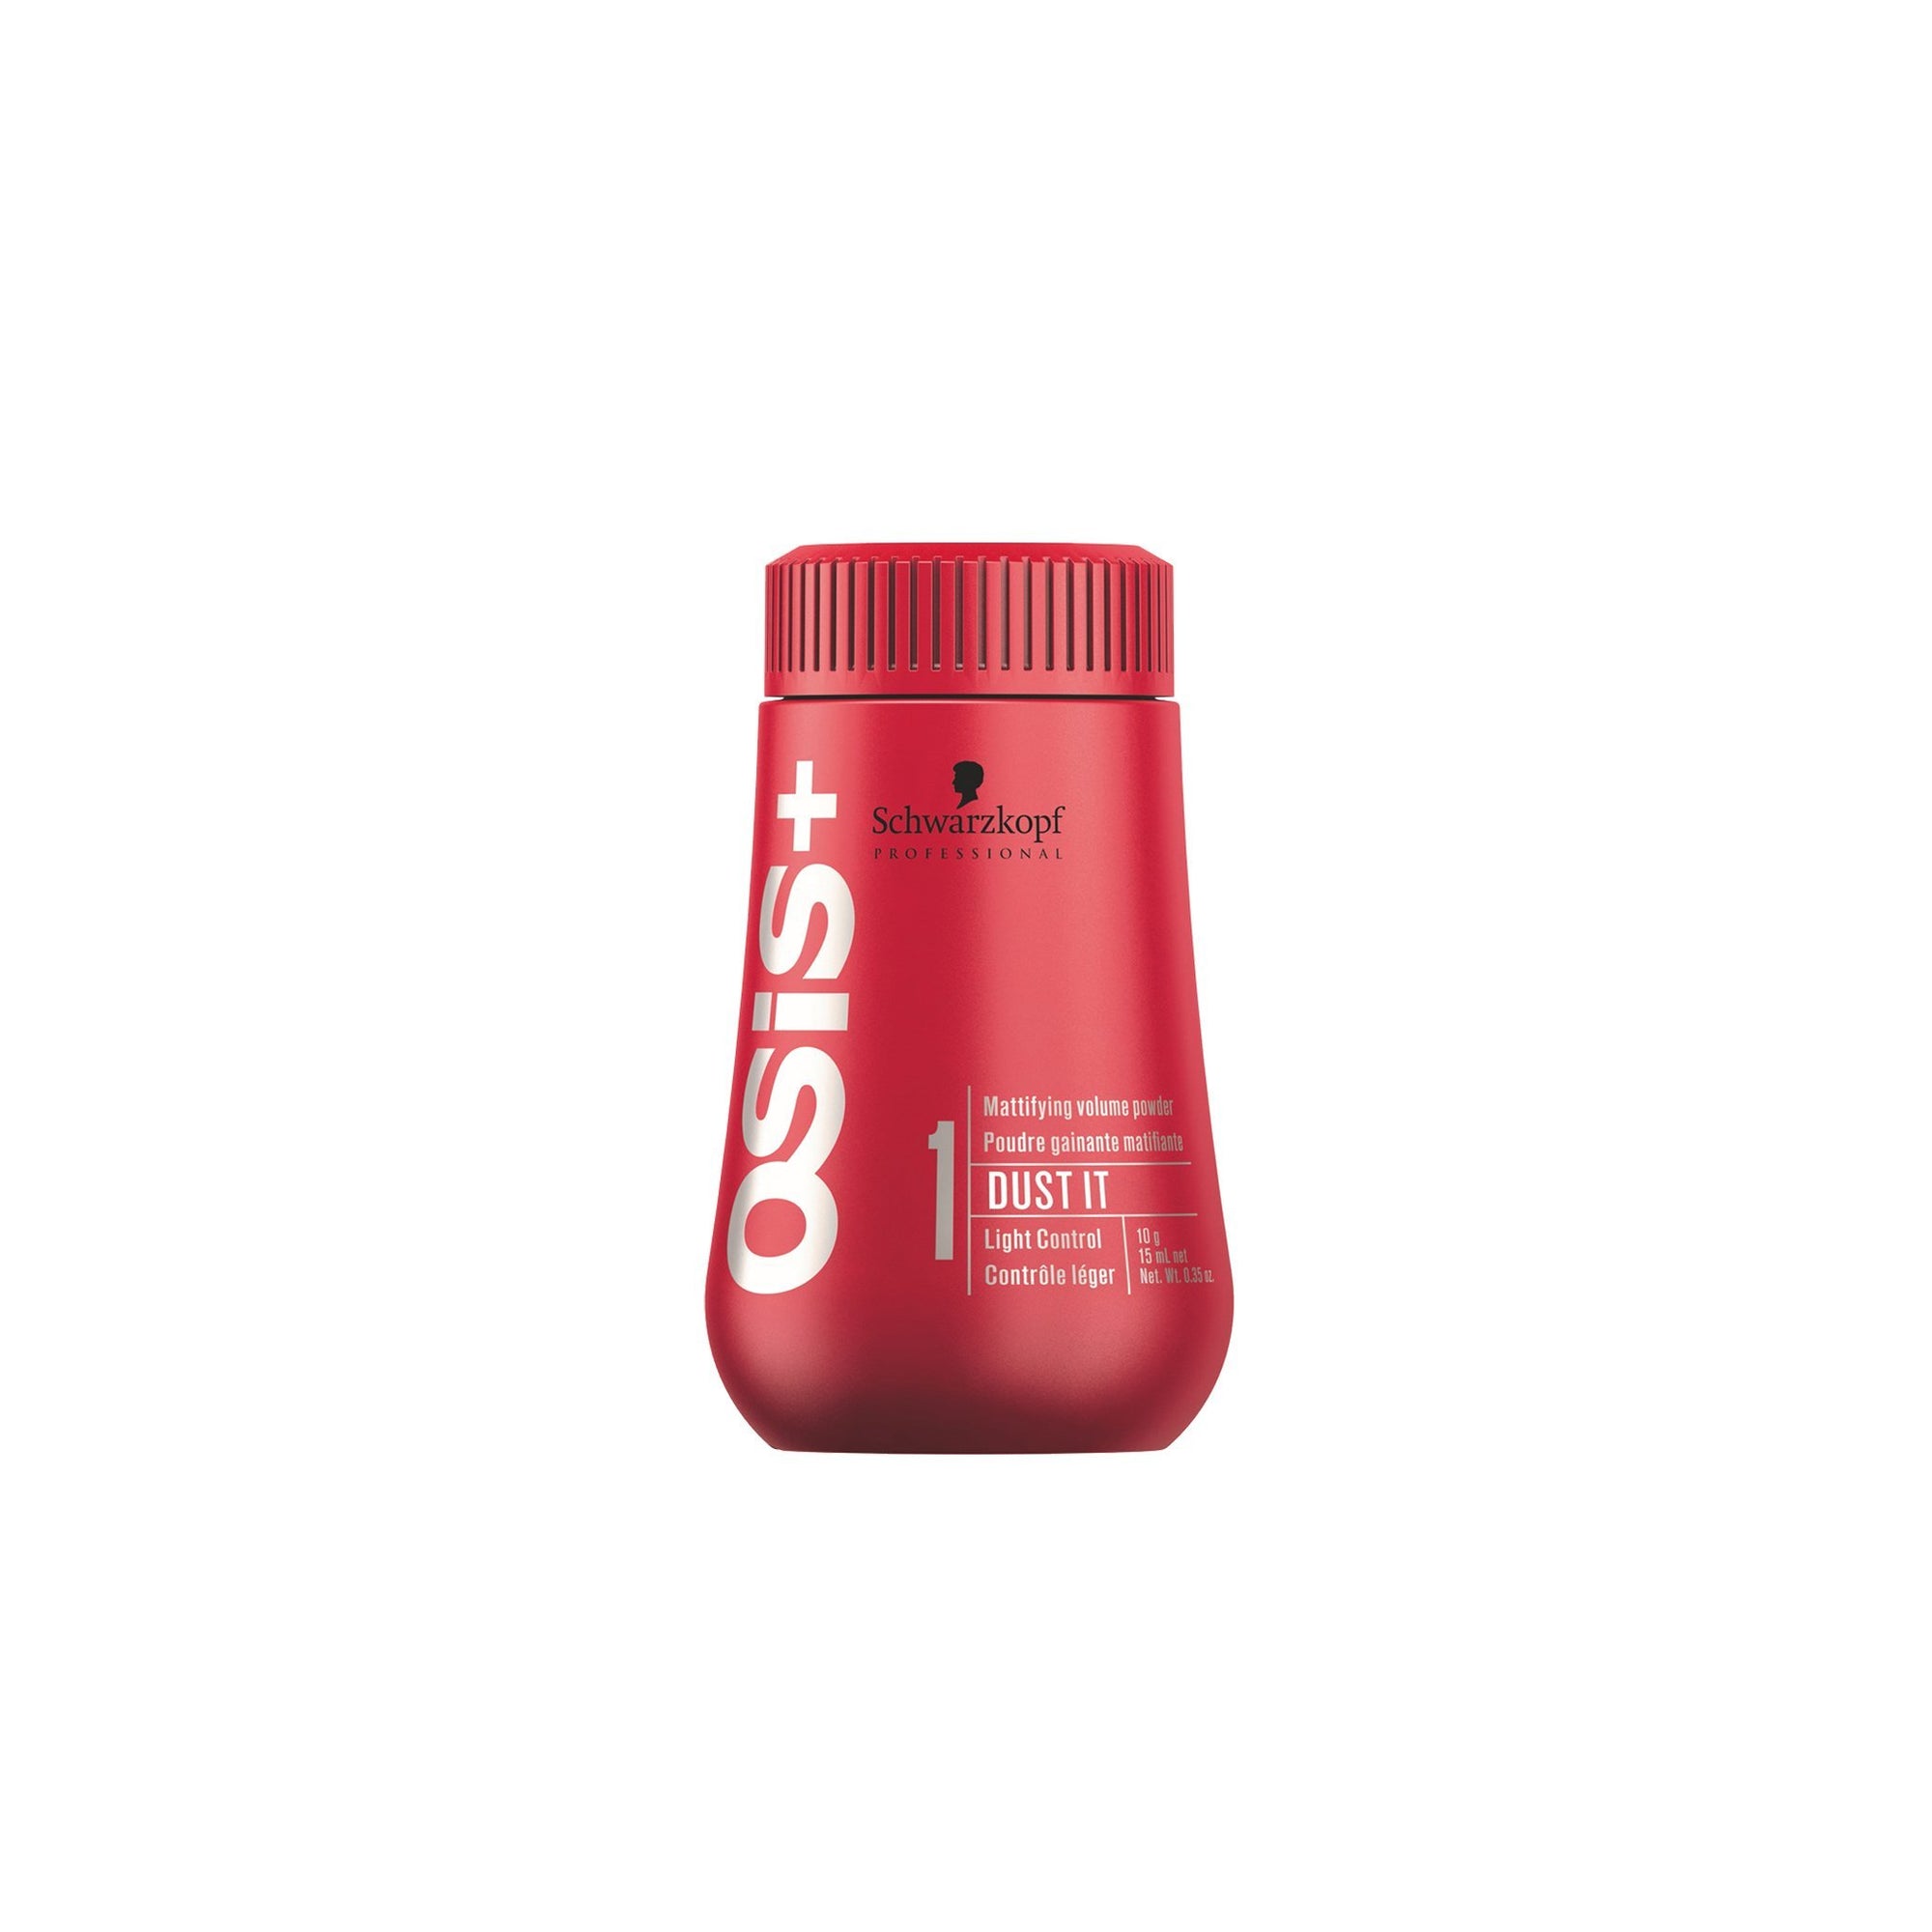 Osis+ Dust It Mattifying Powder 10g